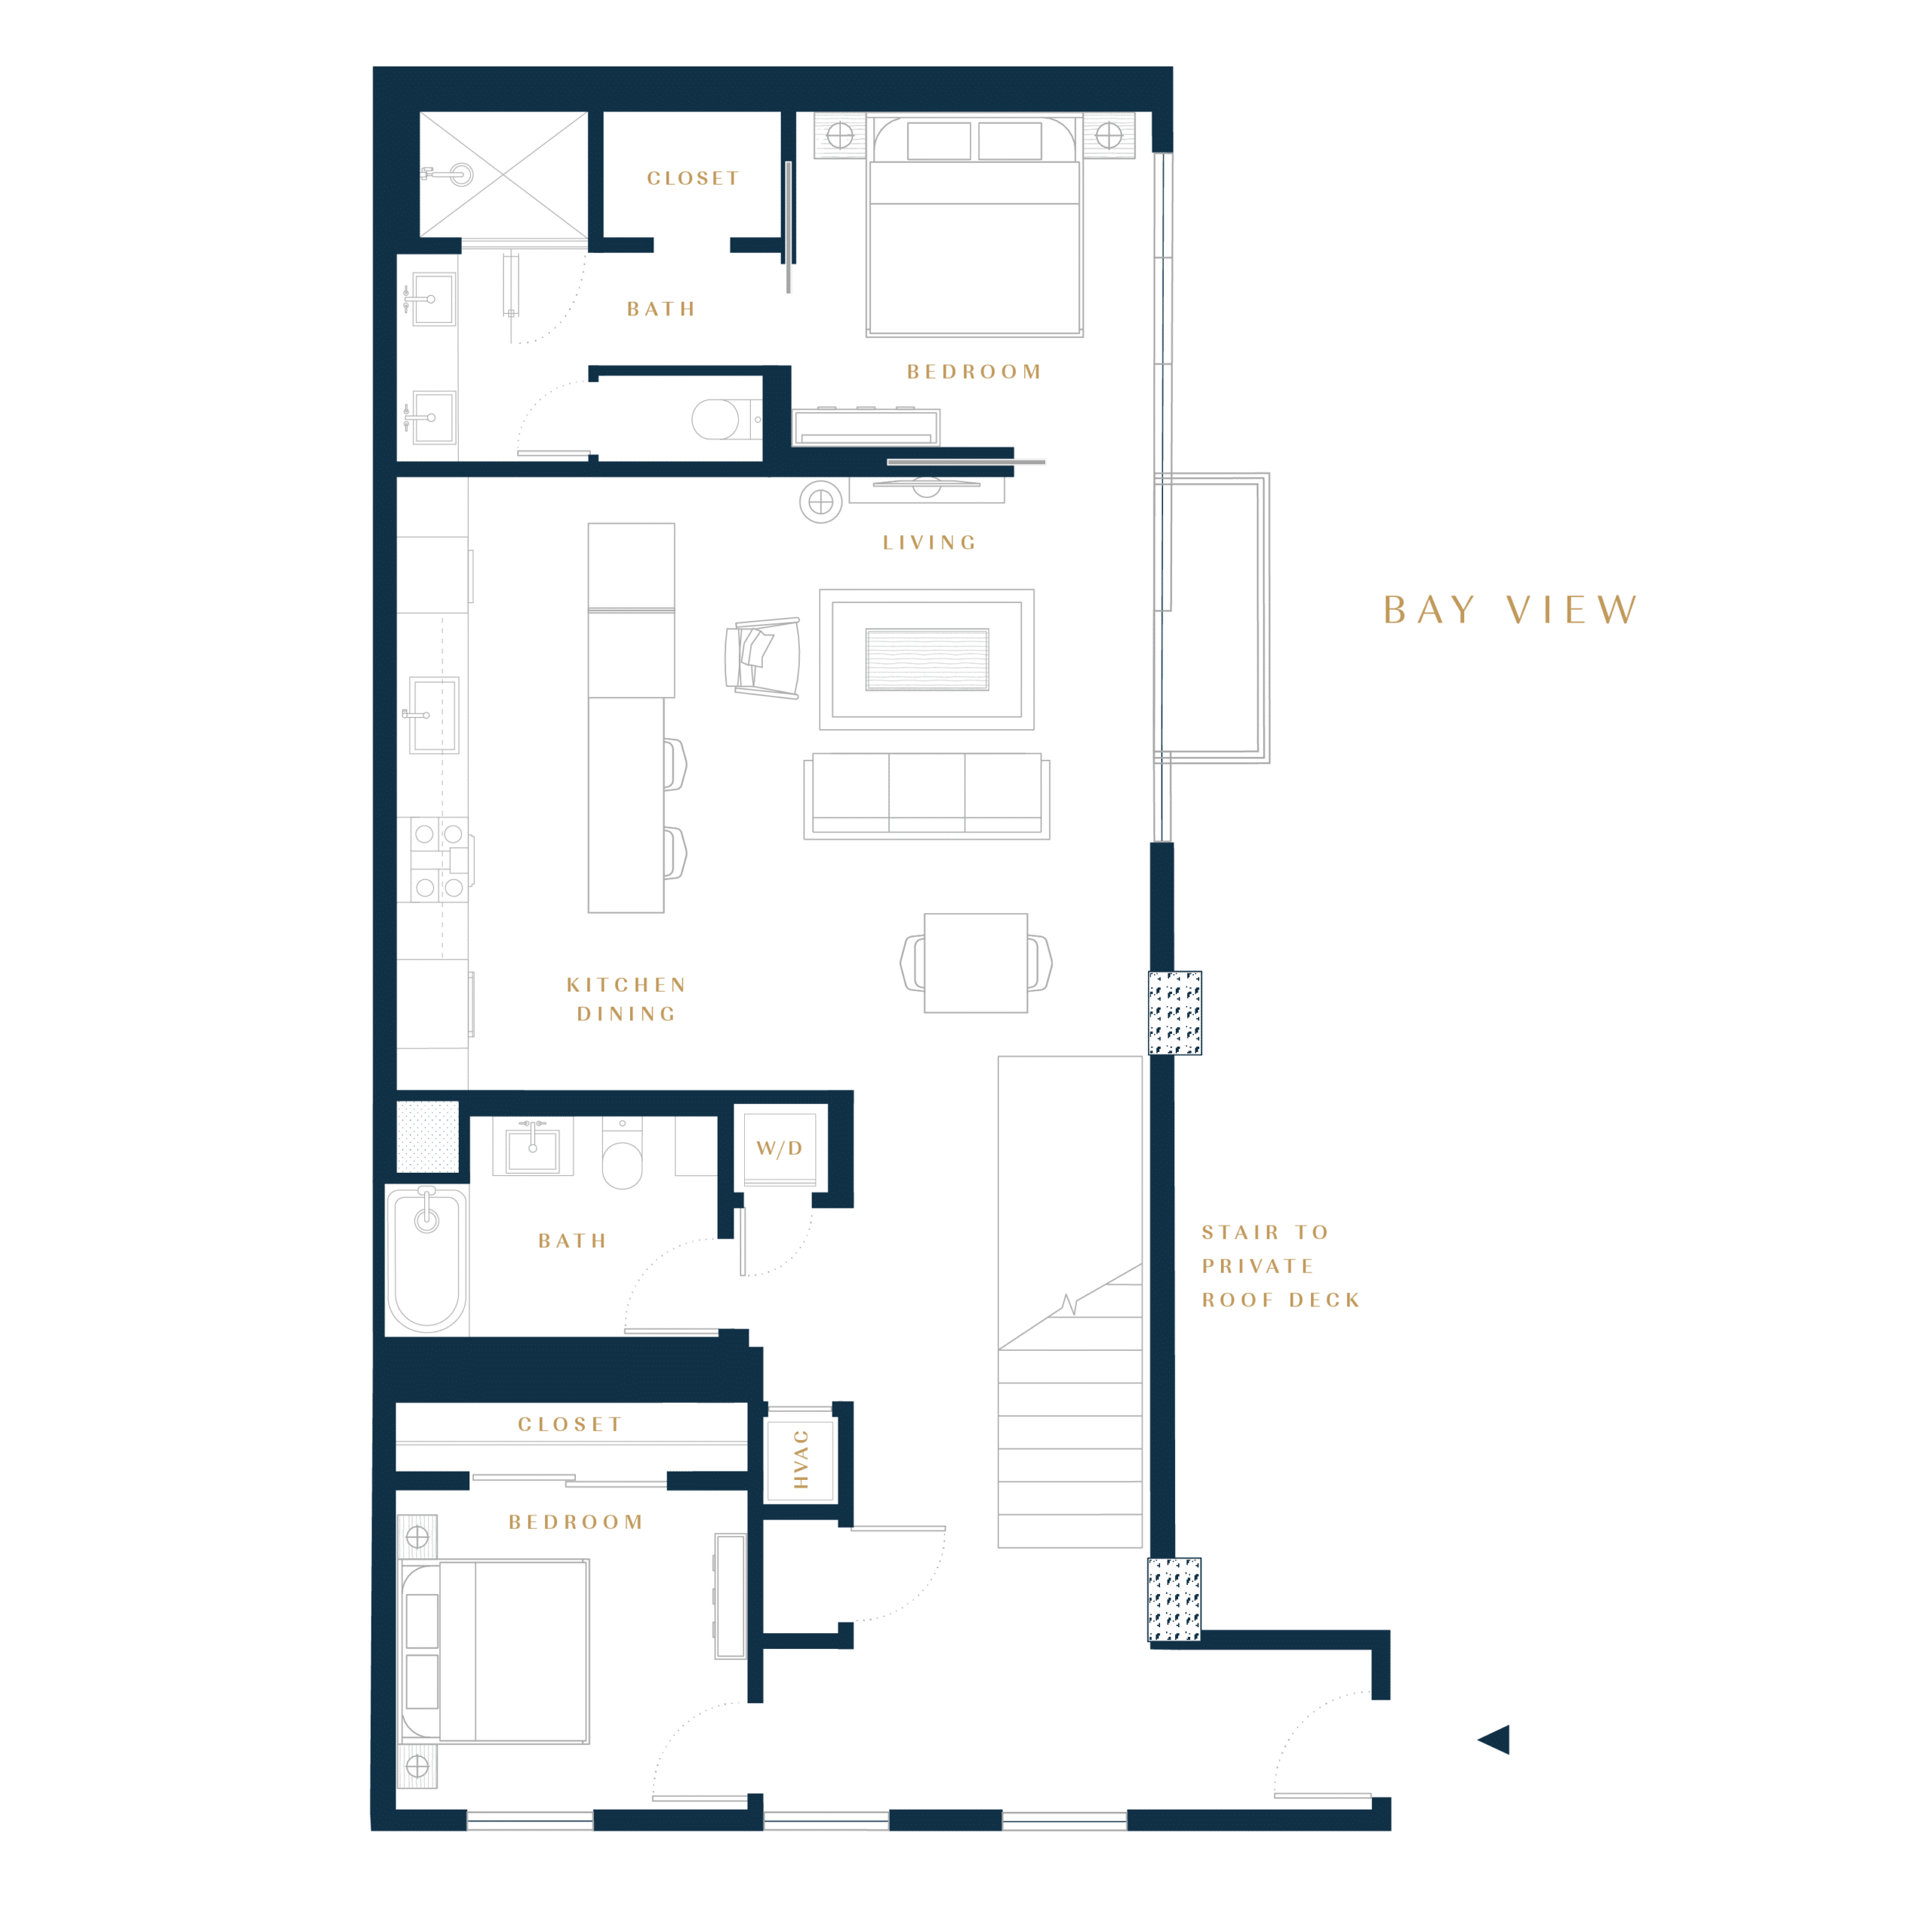 Residence PH condo floor plan in San Francisco